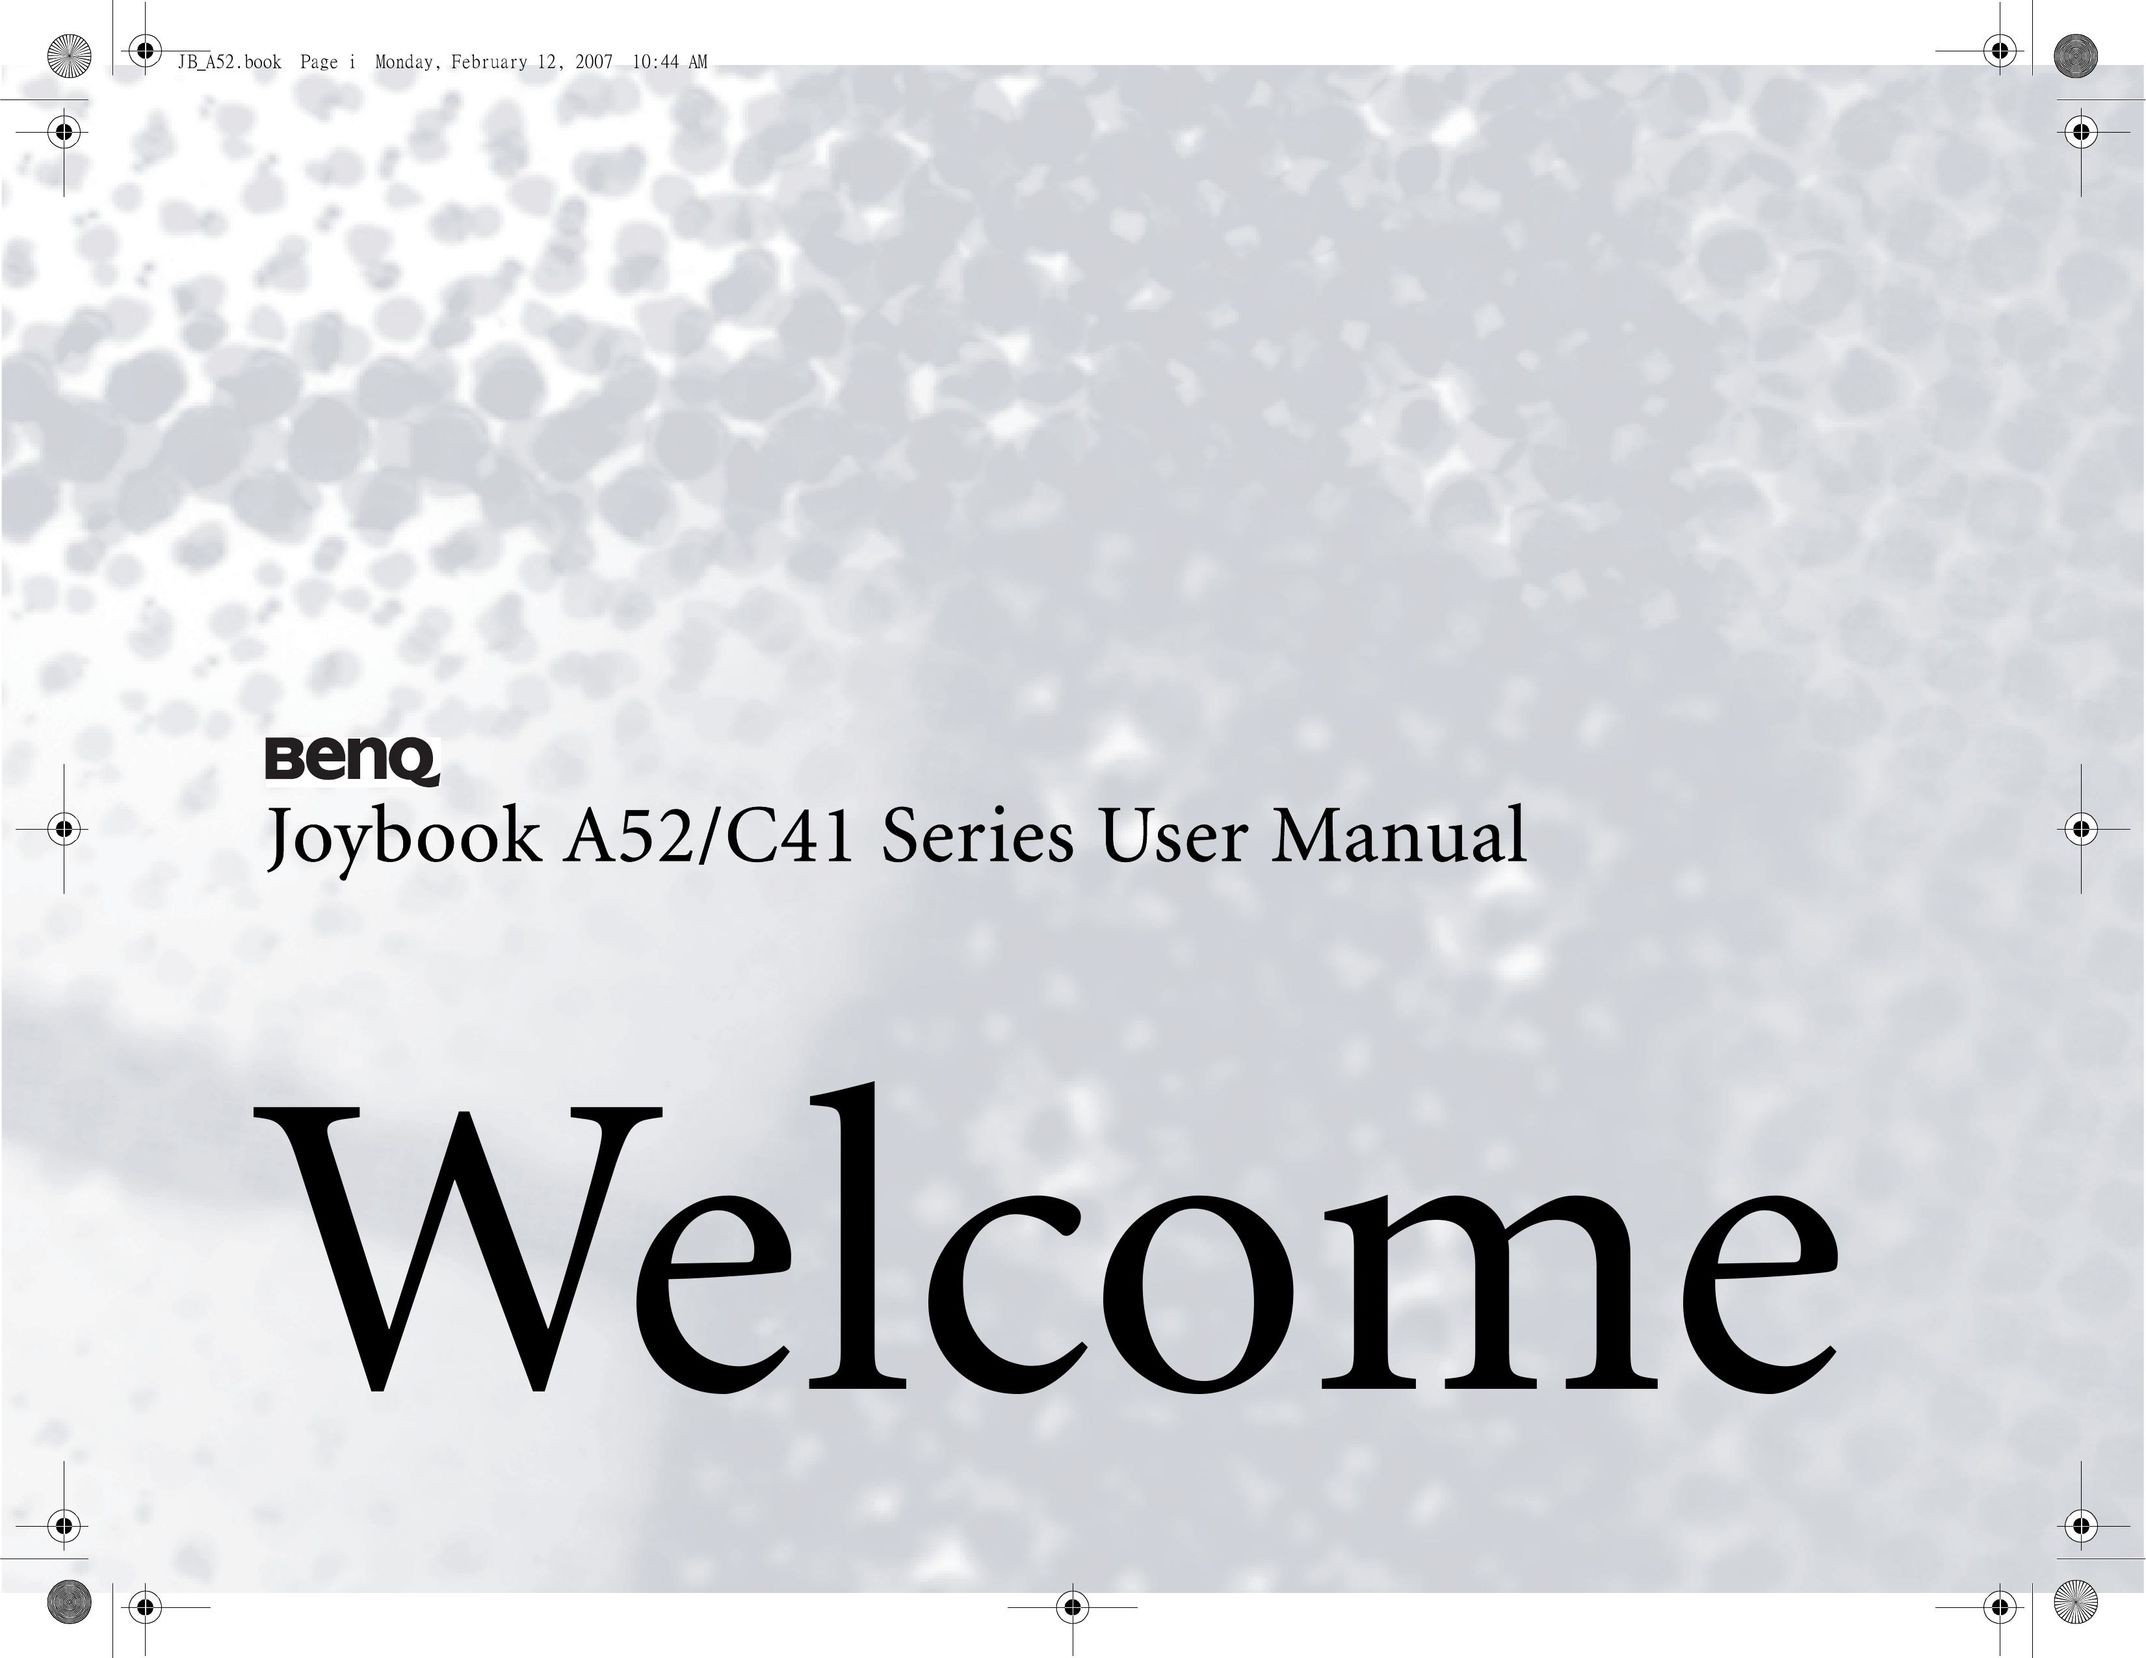 BenQ Joybook Personal Computer User Manual